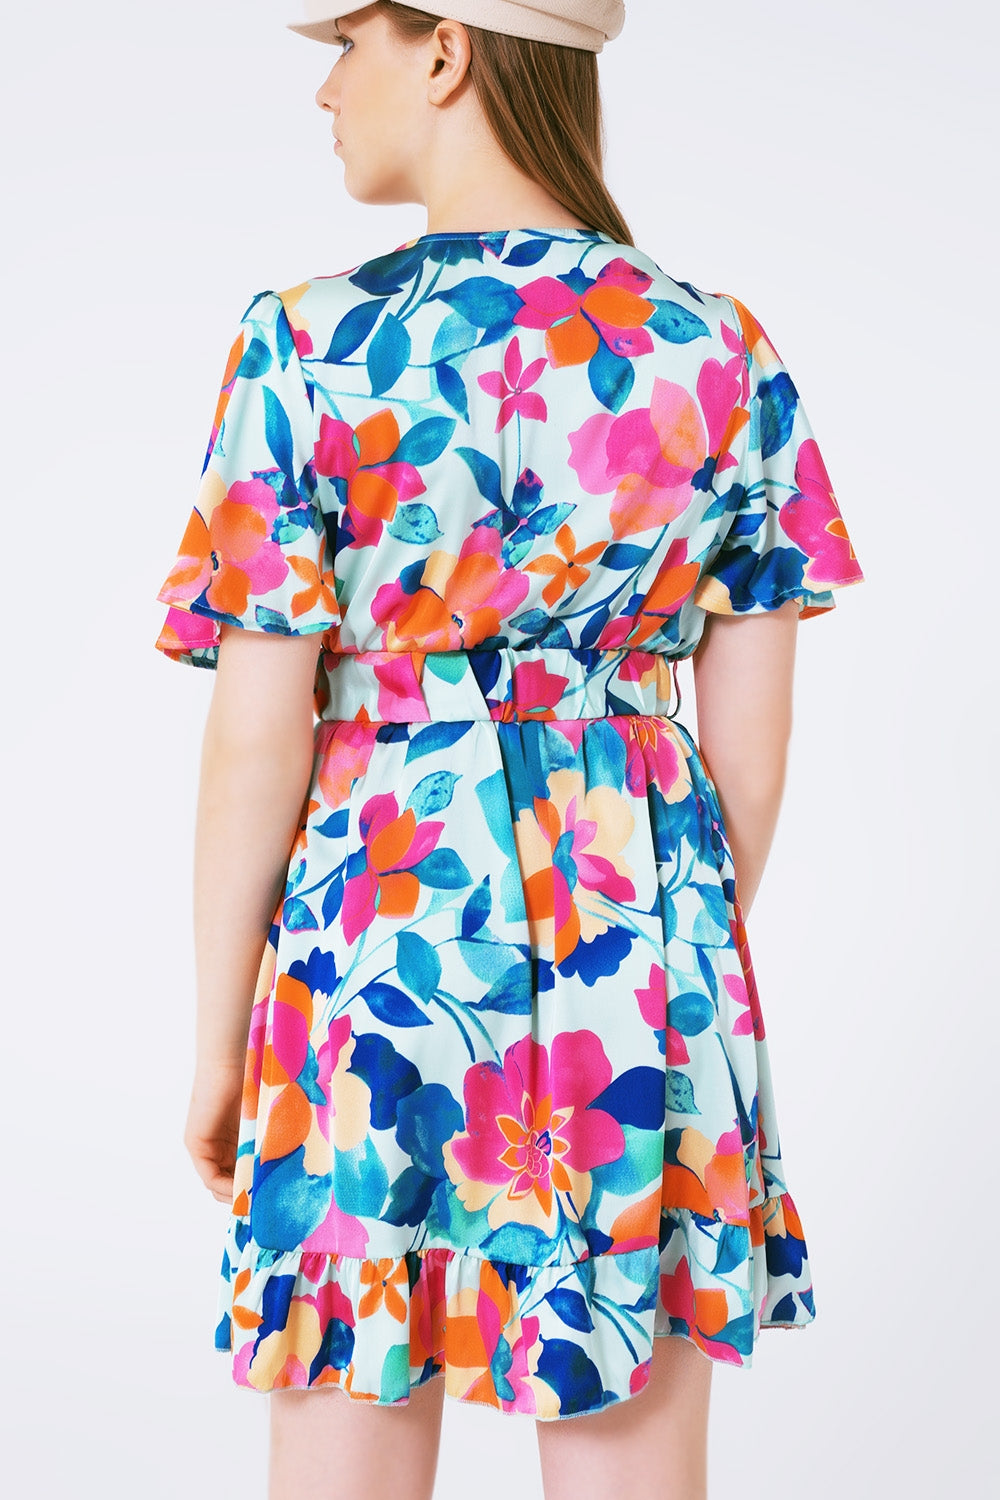 Belted soft satin dress with flower print - Szua Store